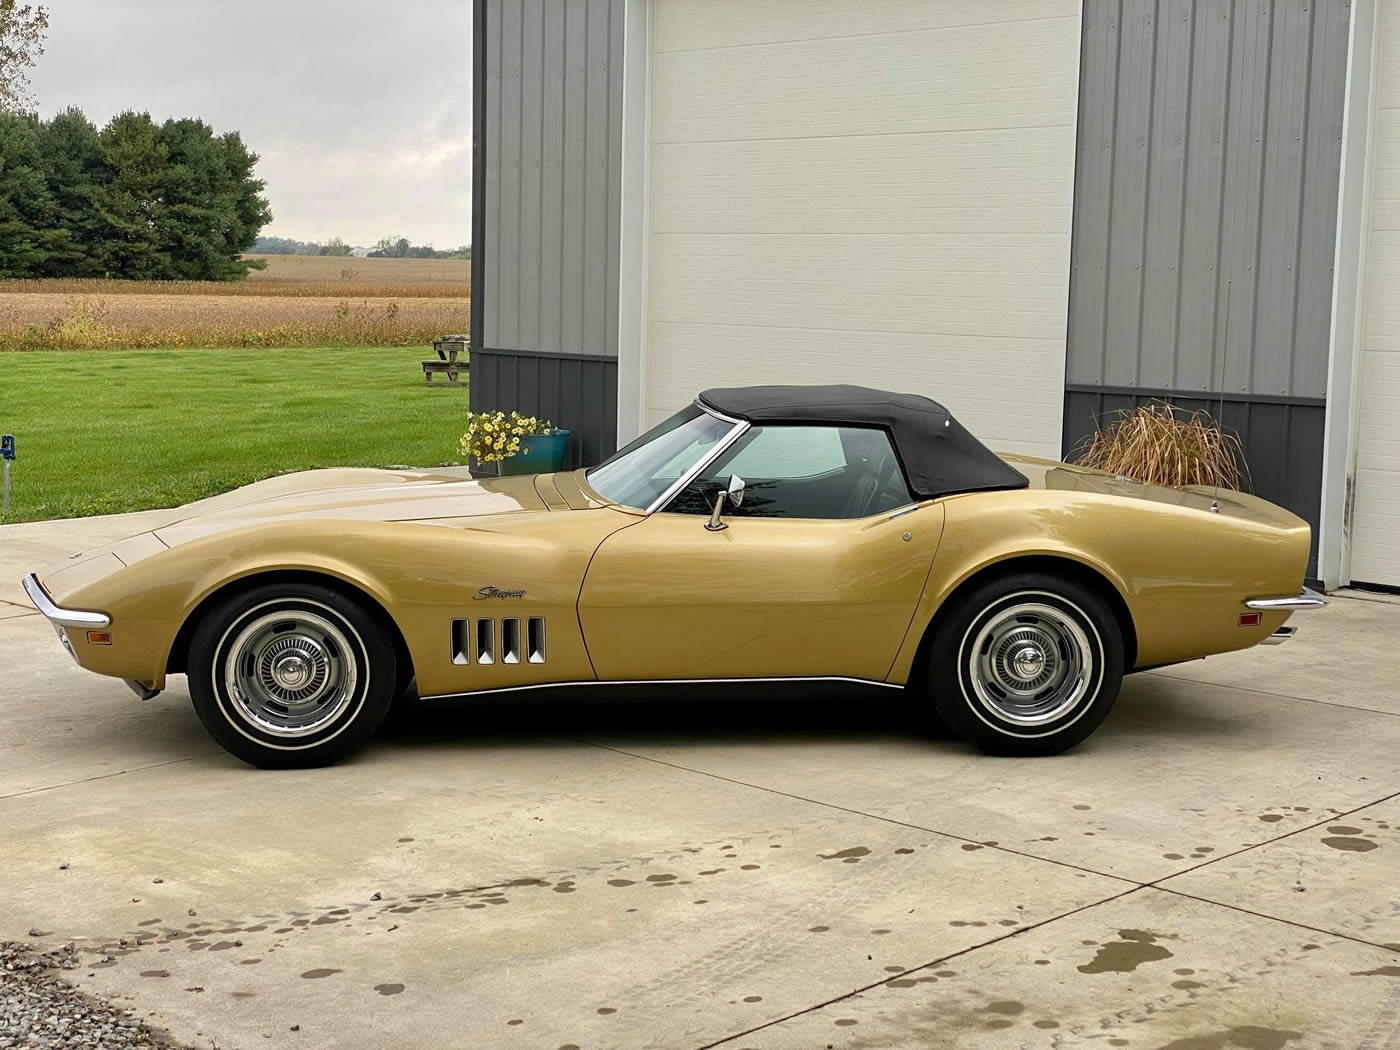 1969 Corvette Convertible in Riverside Gold